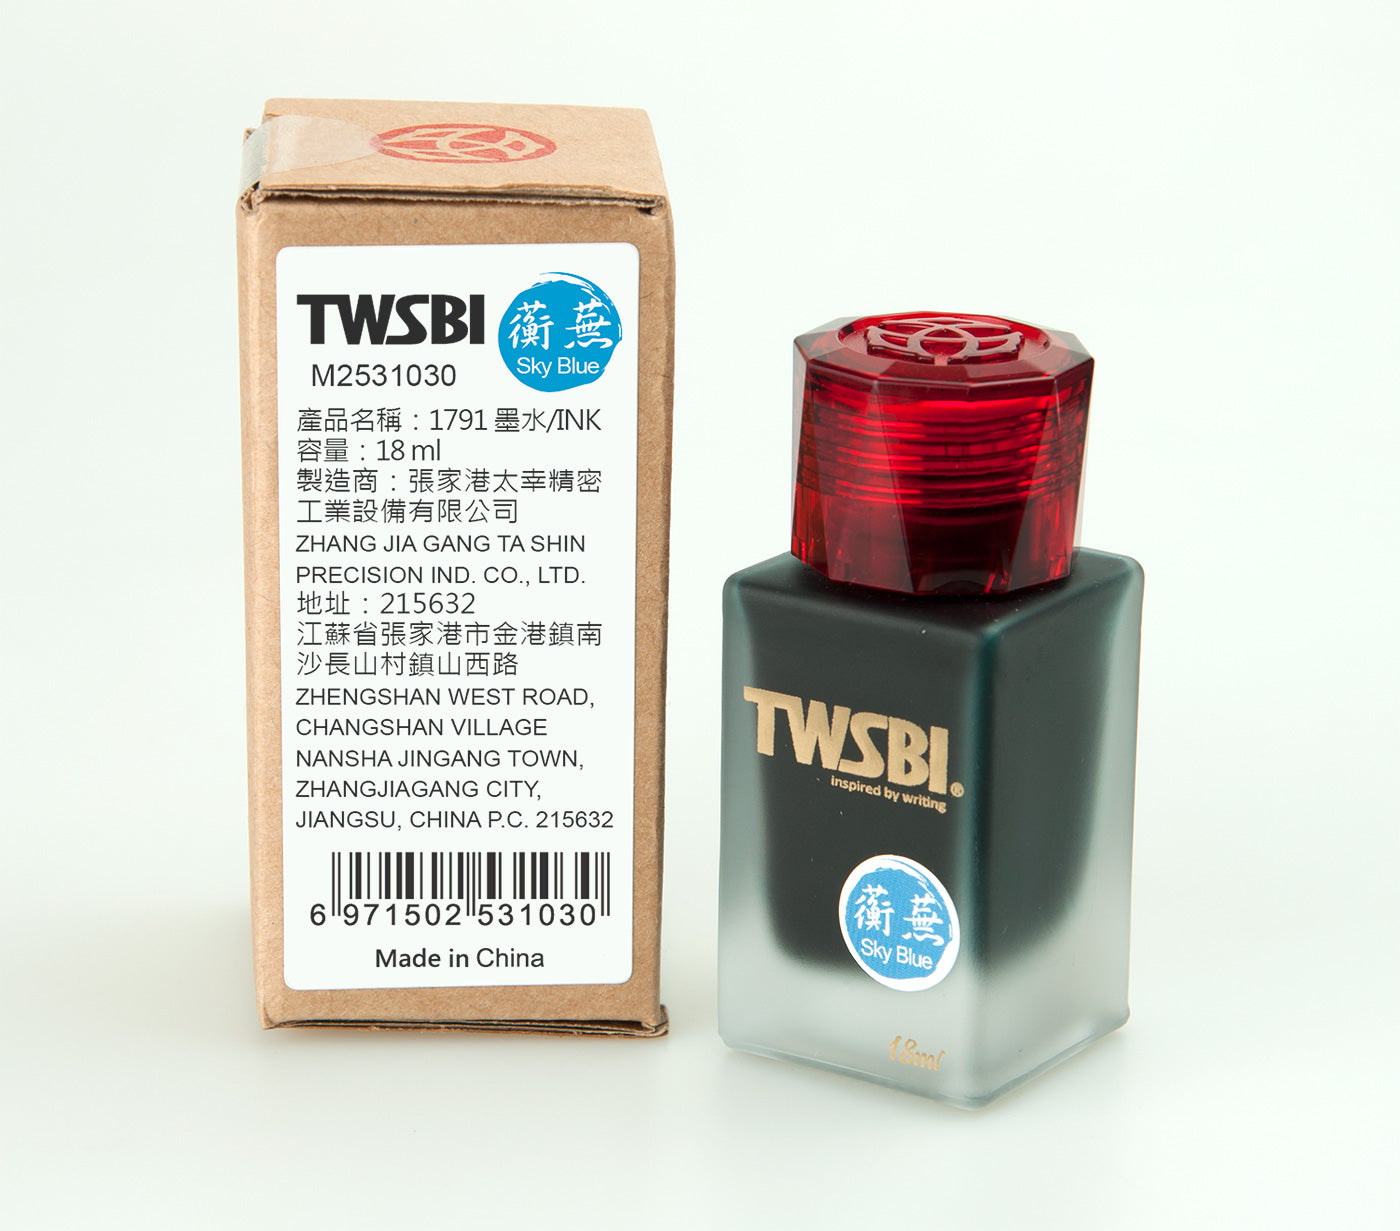 TWSBI Tintenglas 1791 Sky Blue 18ml